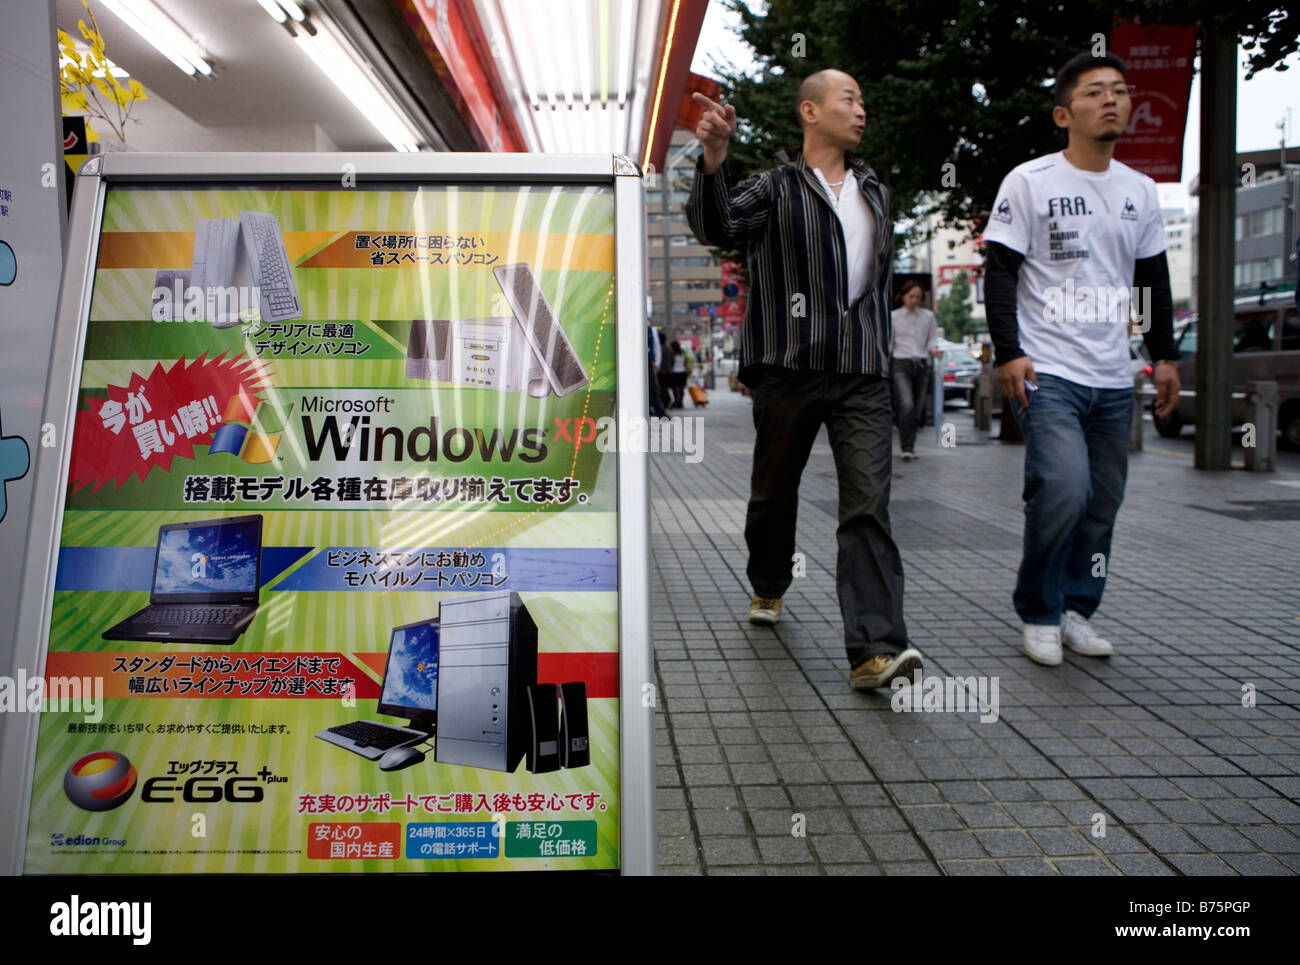 Advertisement of windows Vista on the pavement in Tokyo Japan Stock Photo